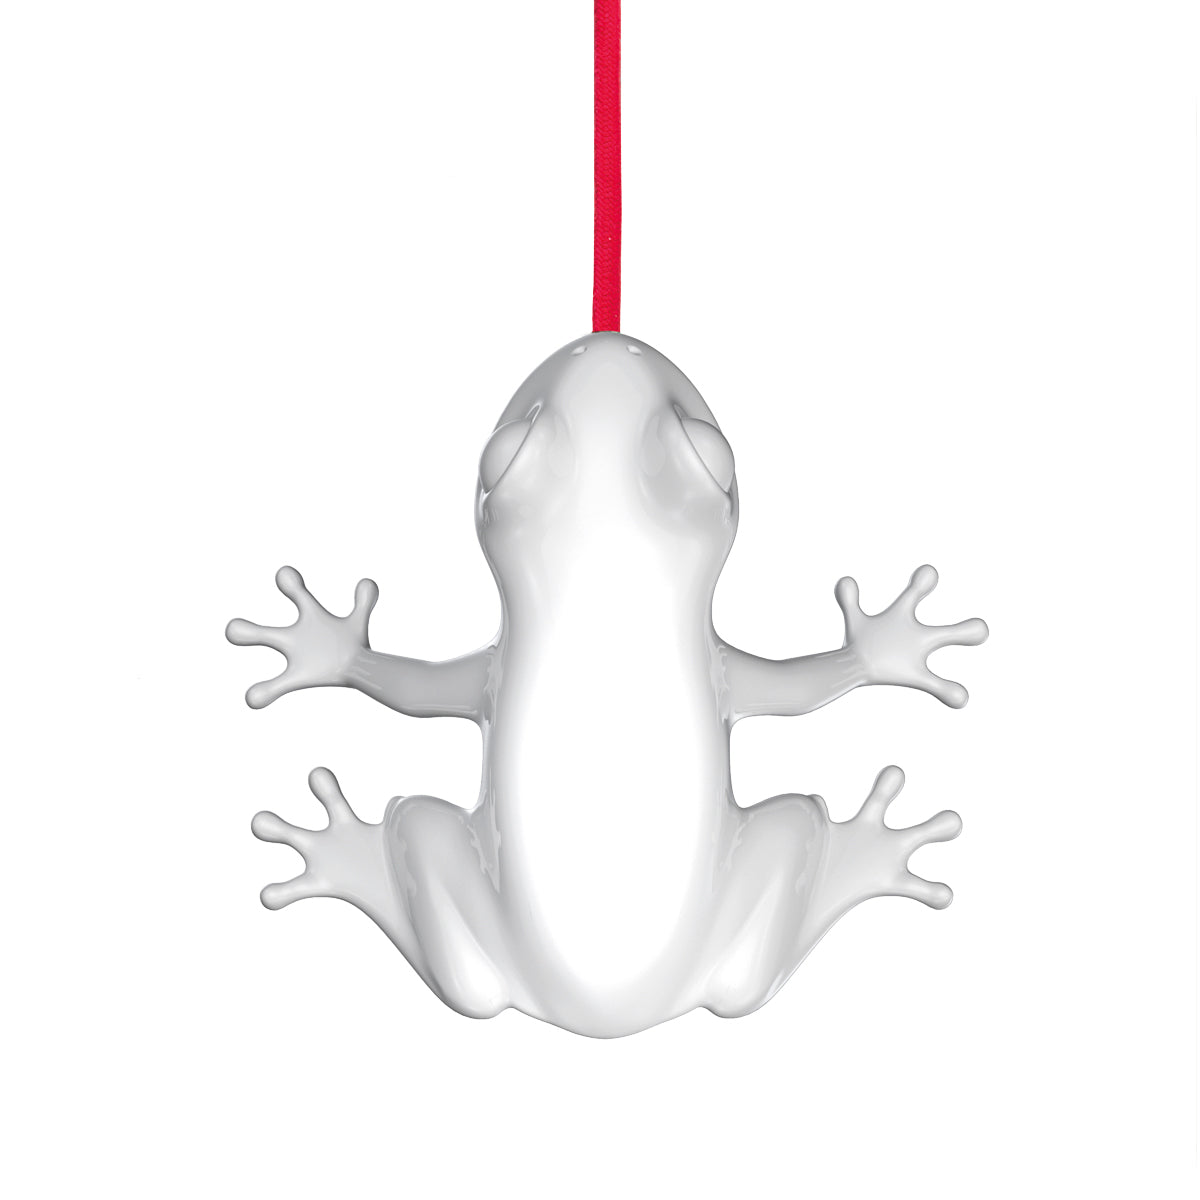 Hungry Frog Lamp - Qeeboo